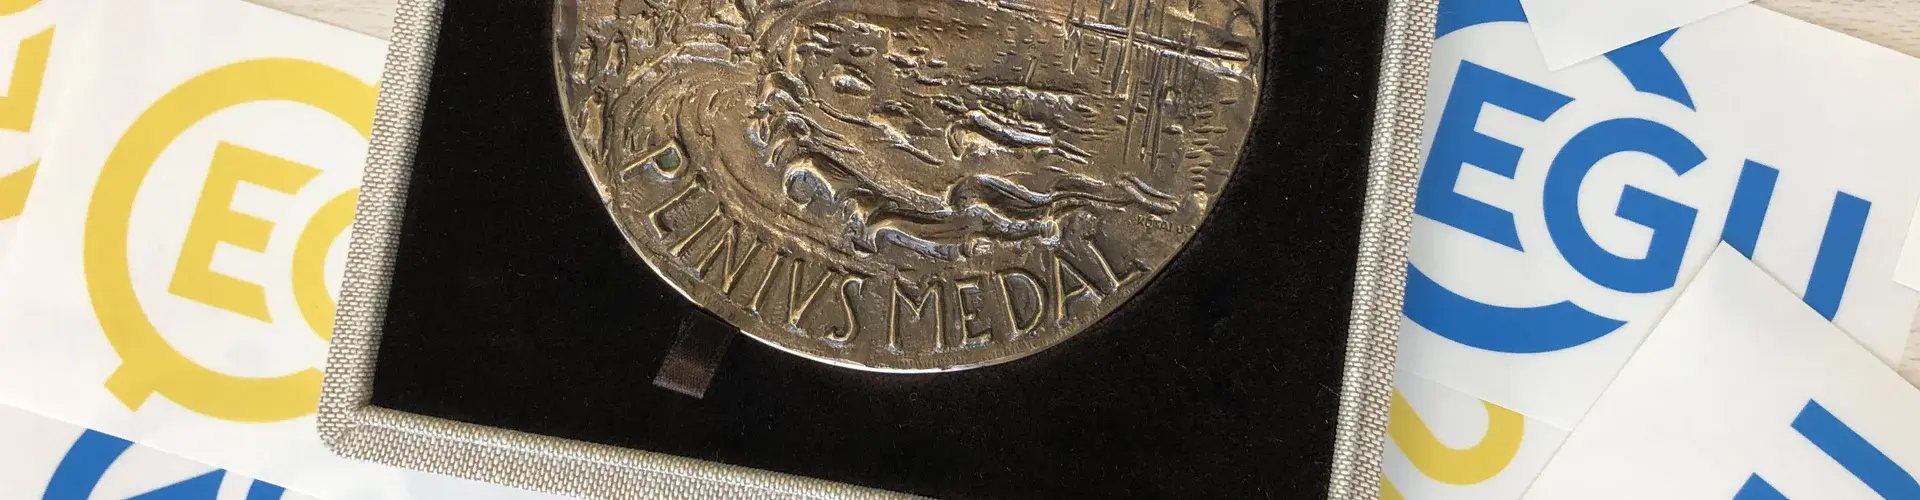 The EGU Plinius Medal (Credit: EGU)